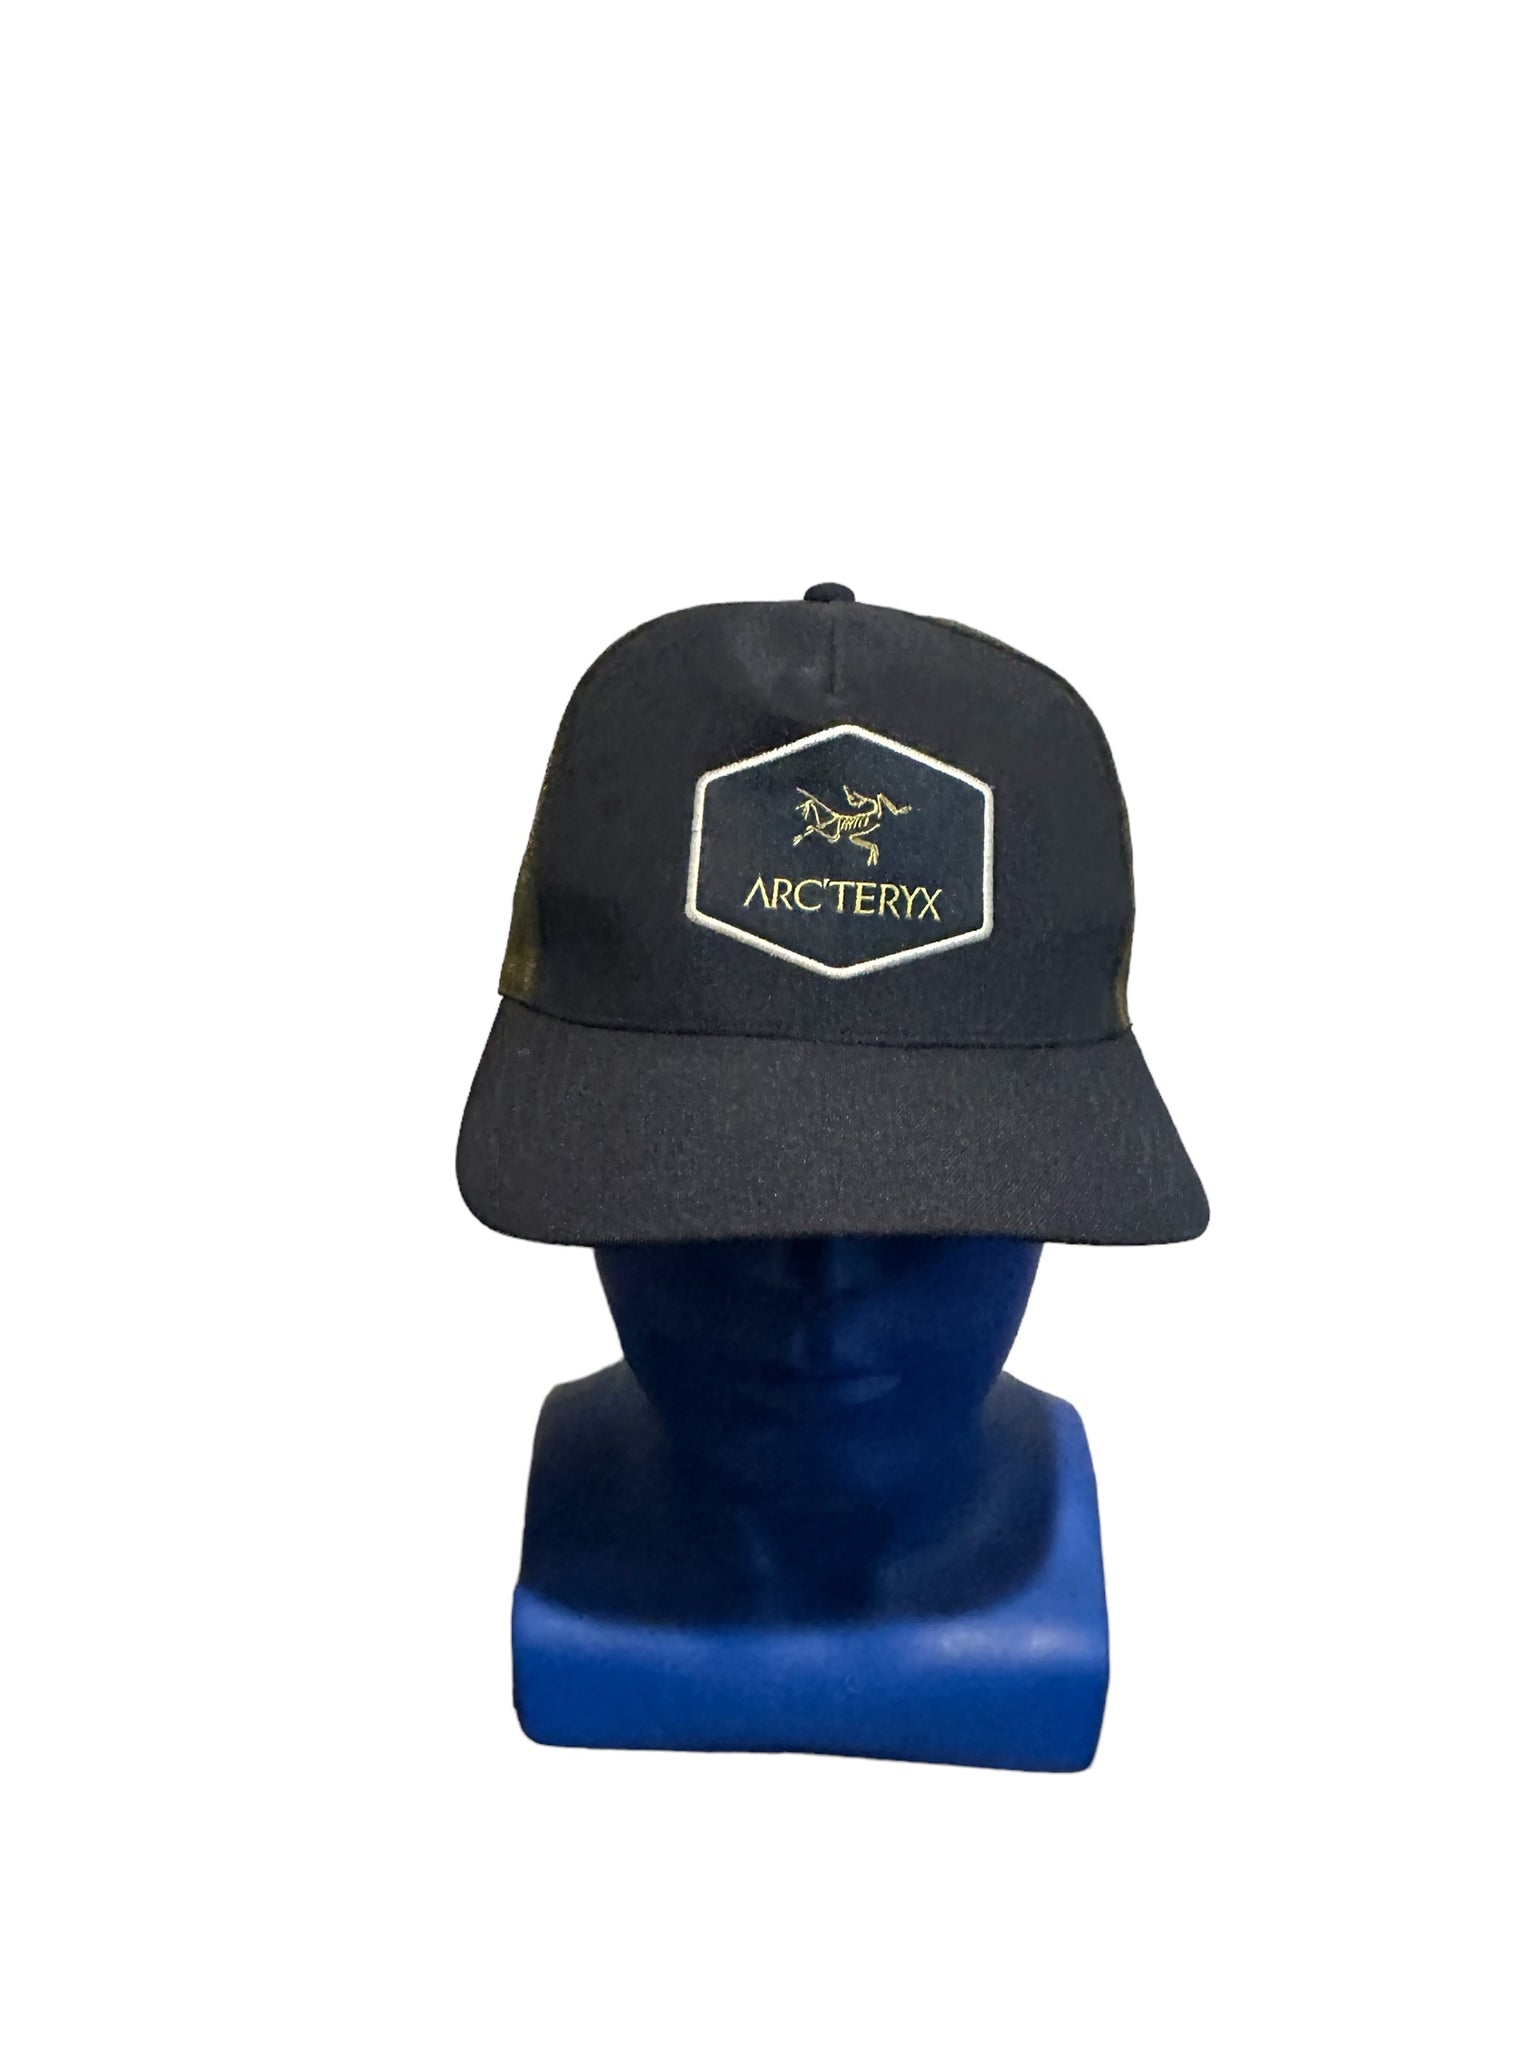 Arc'teryx Snapback Trucker Hat Hexagonal Patch Blue & Brown Mesh Cap